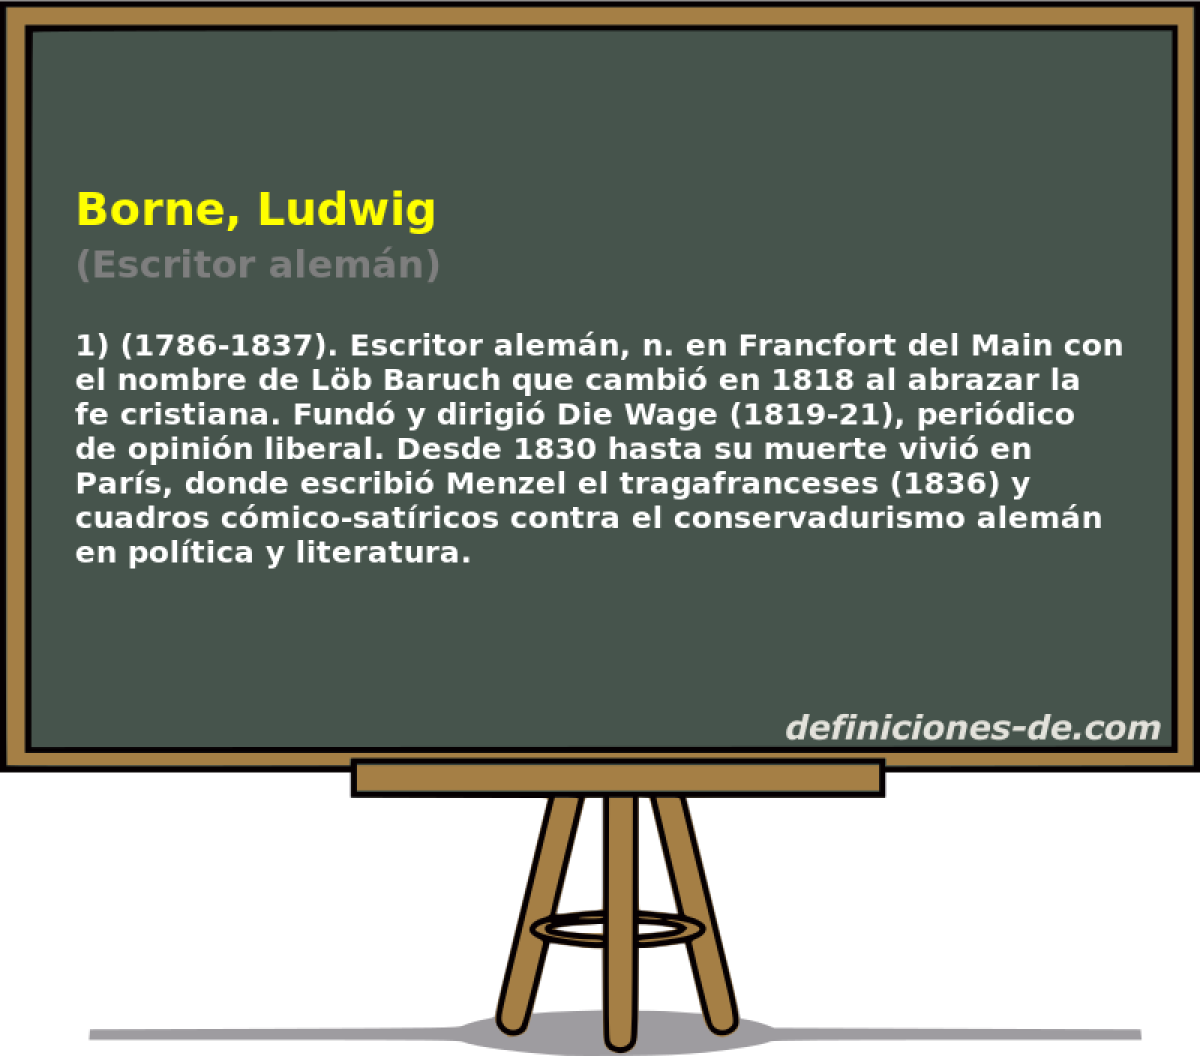 Borne, Ludwig (Escritor alemn)